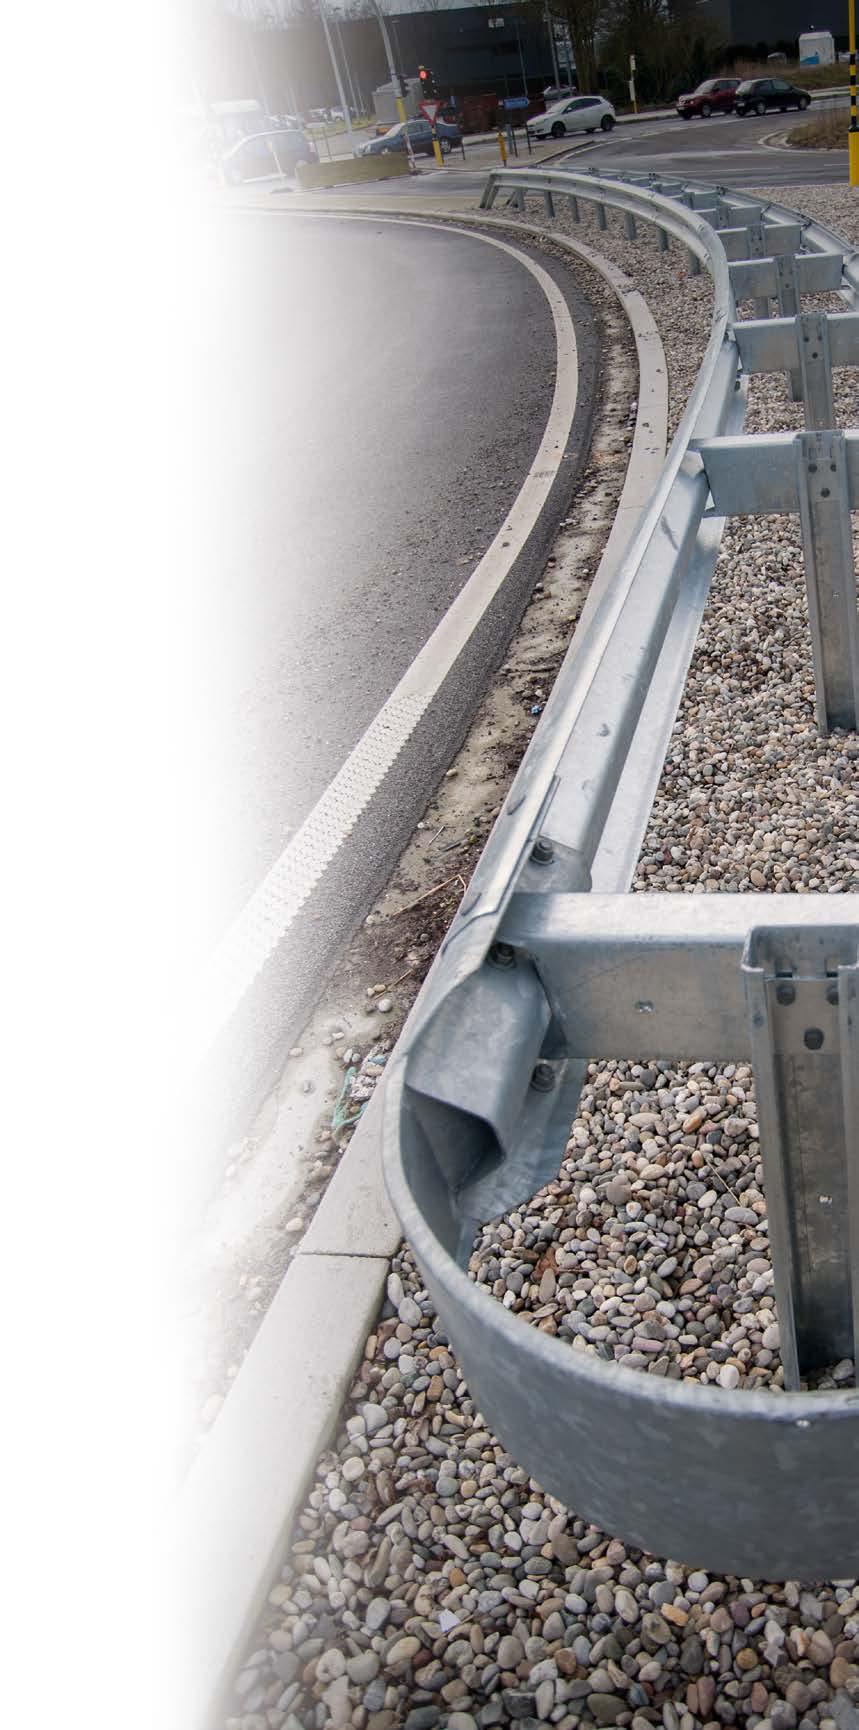 Safety barrier design To save lifes, roadside restraint systems